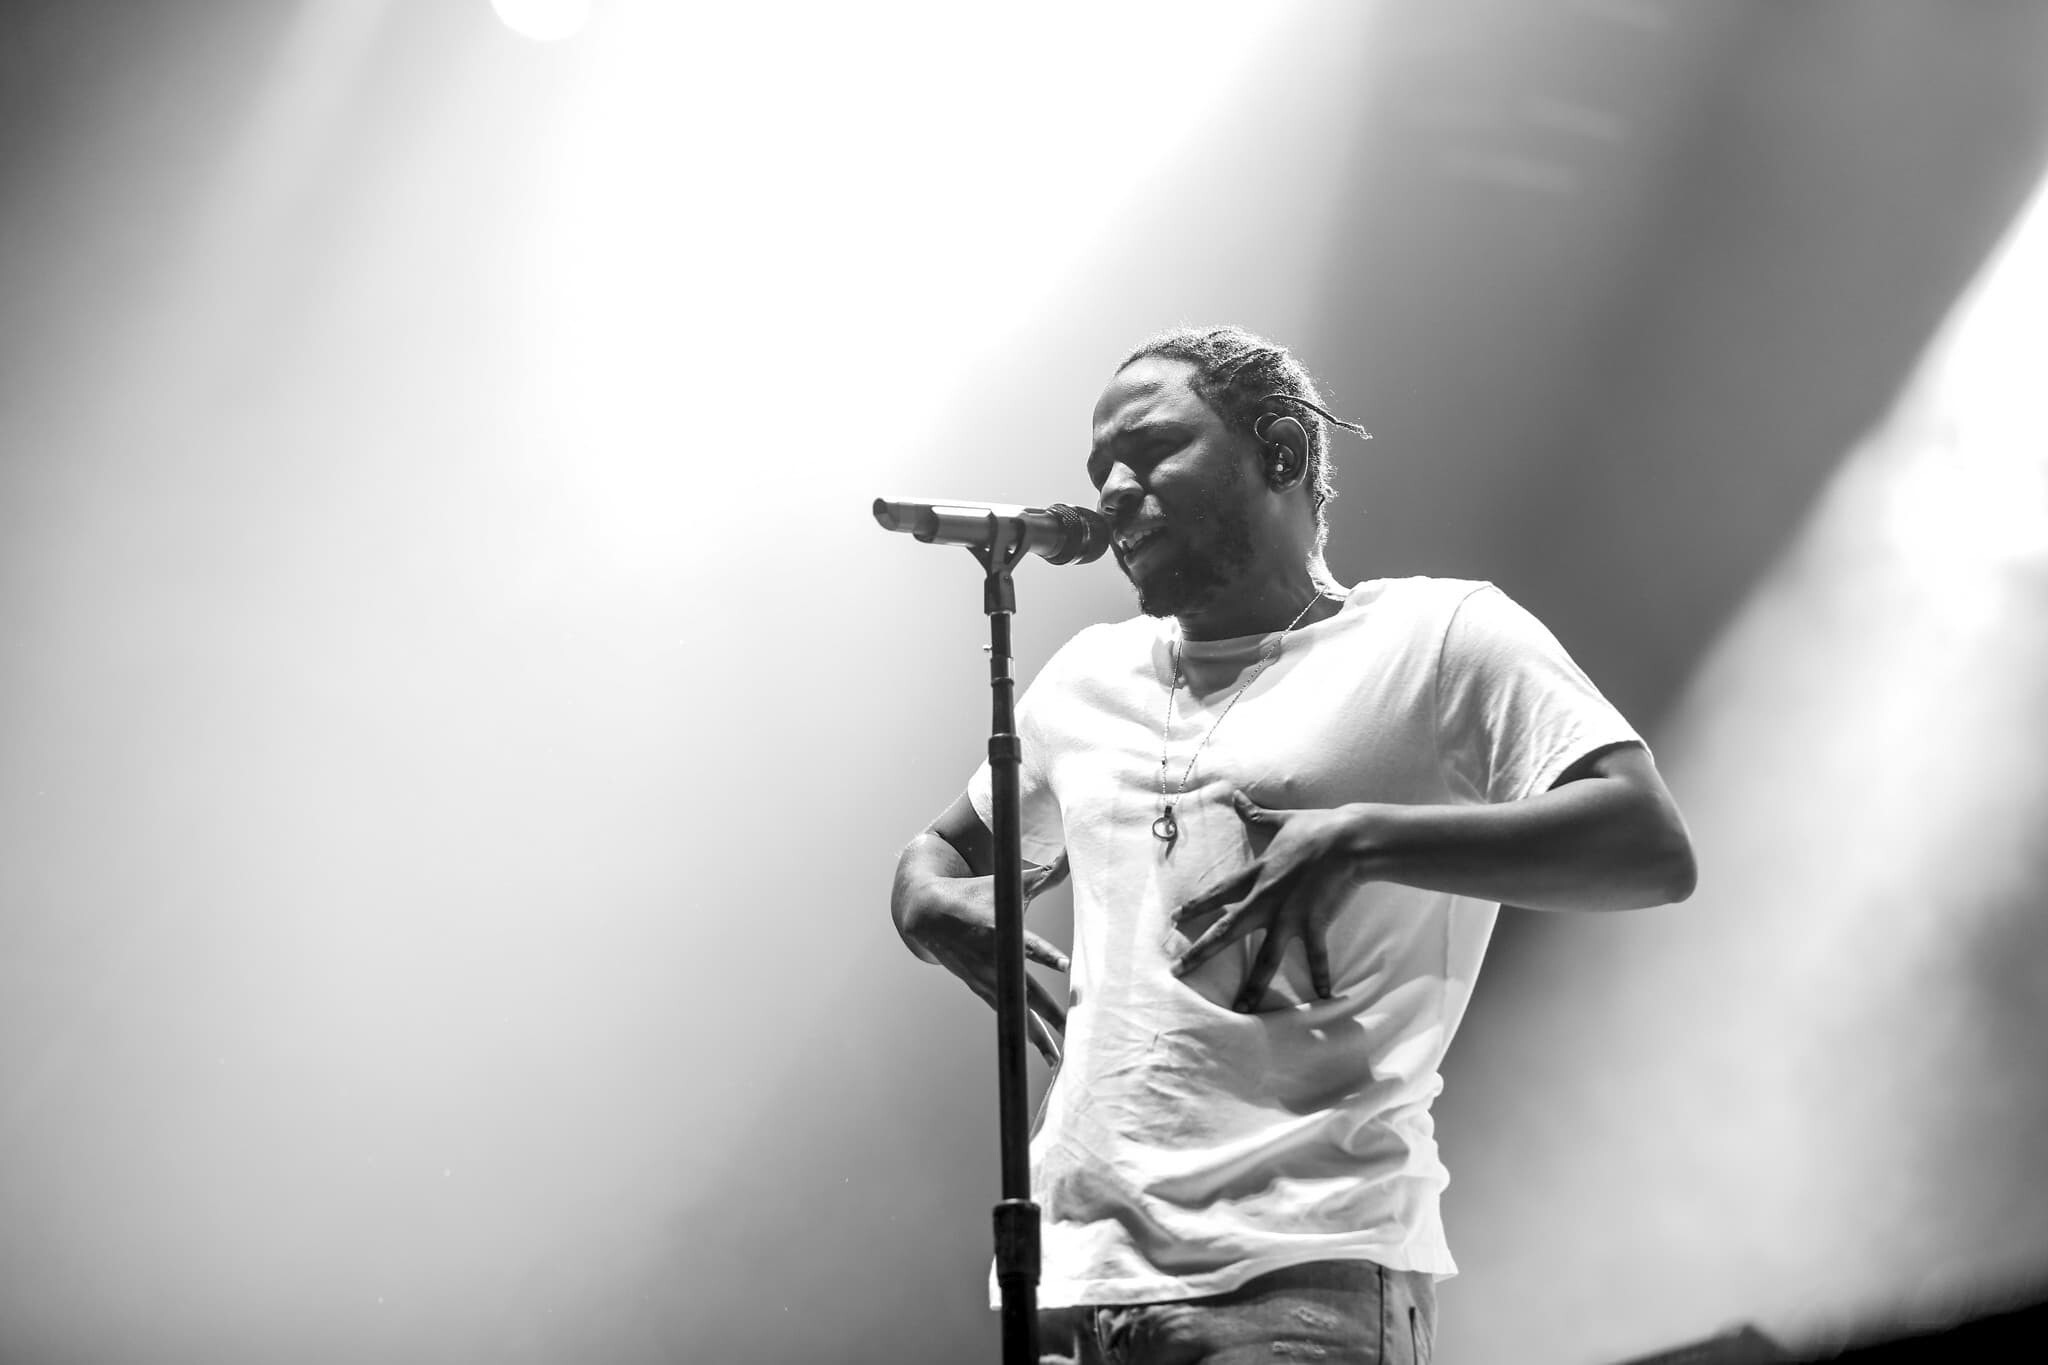 HD wallpaper, Poetry In Motion, Musical Genius, Desktop Hd Kendrick Lamar Background Image, Hip Hop Icon, 2050X1370 Hd Desktop, Kendrick Lamar